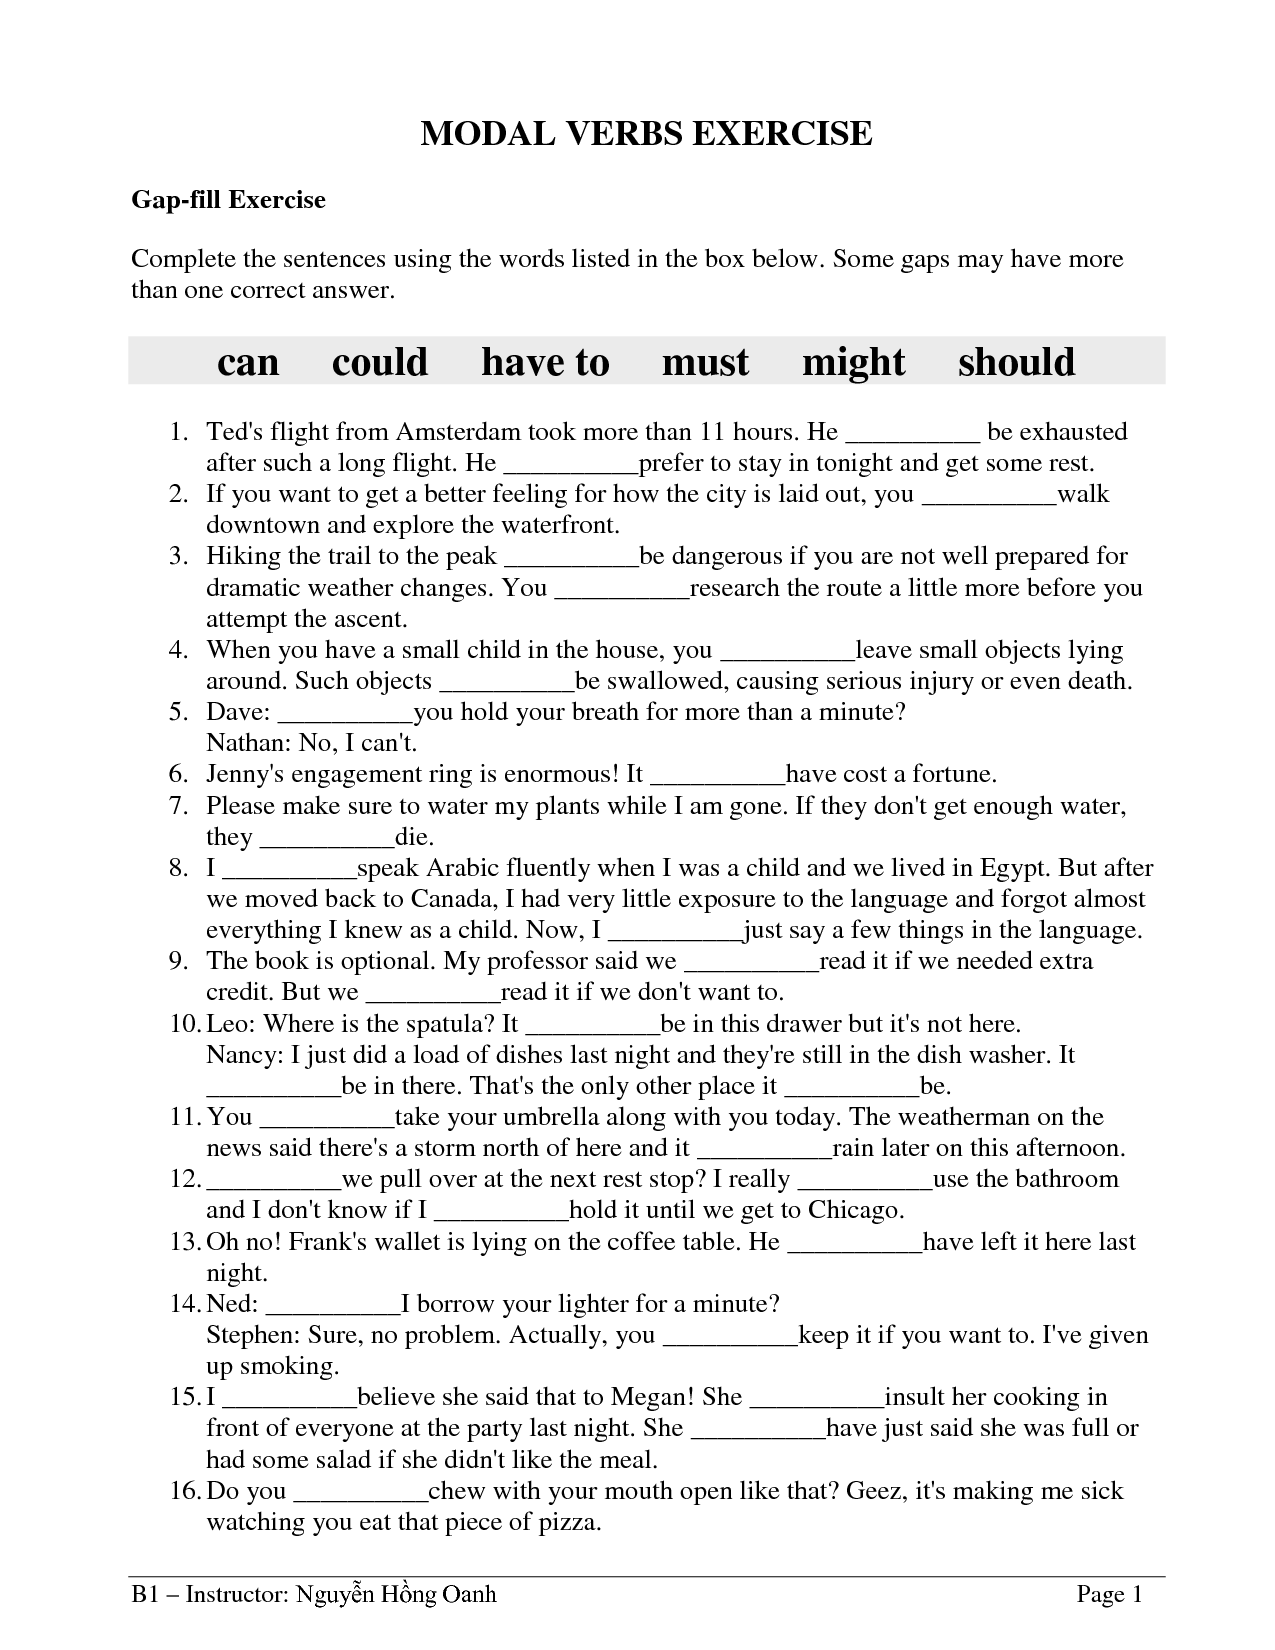 Modal Verbs Worksheets For Grade 7